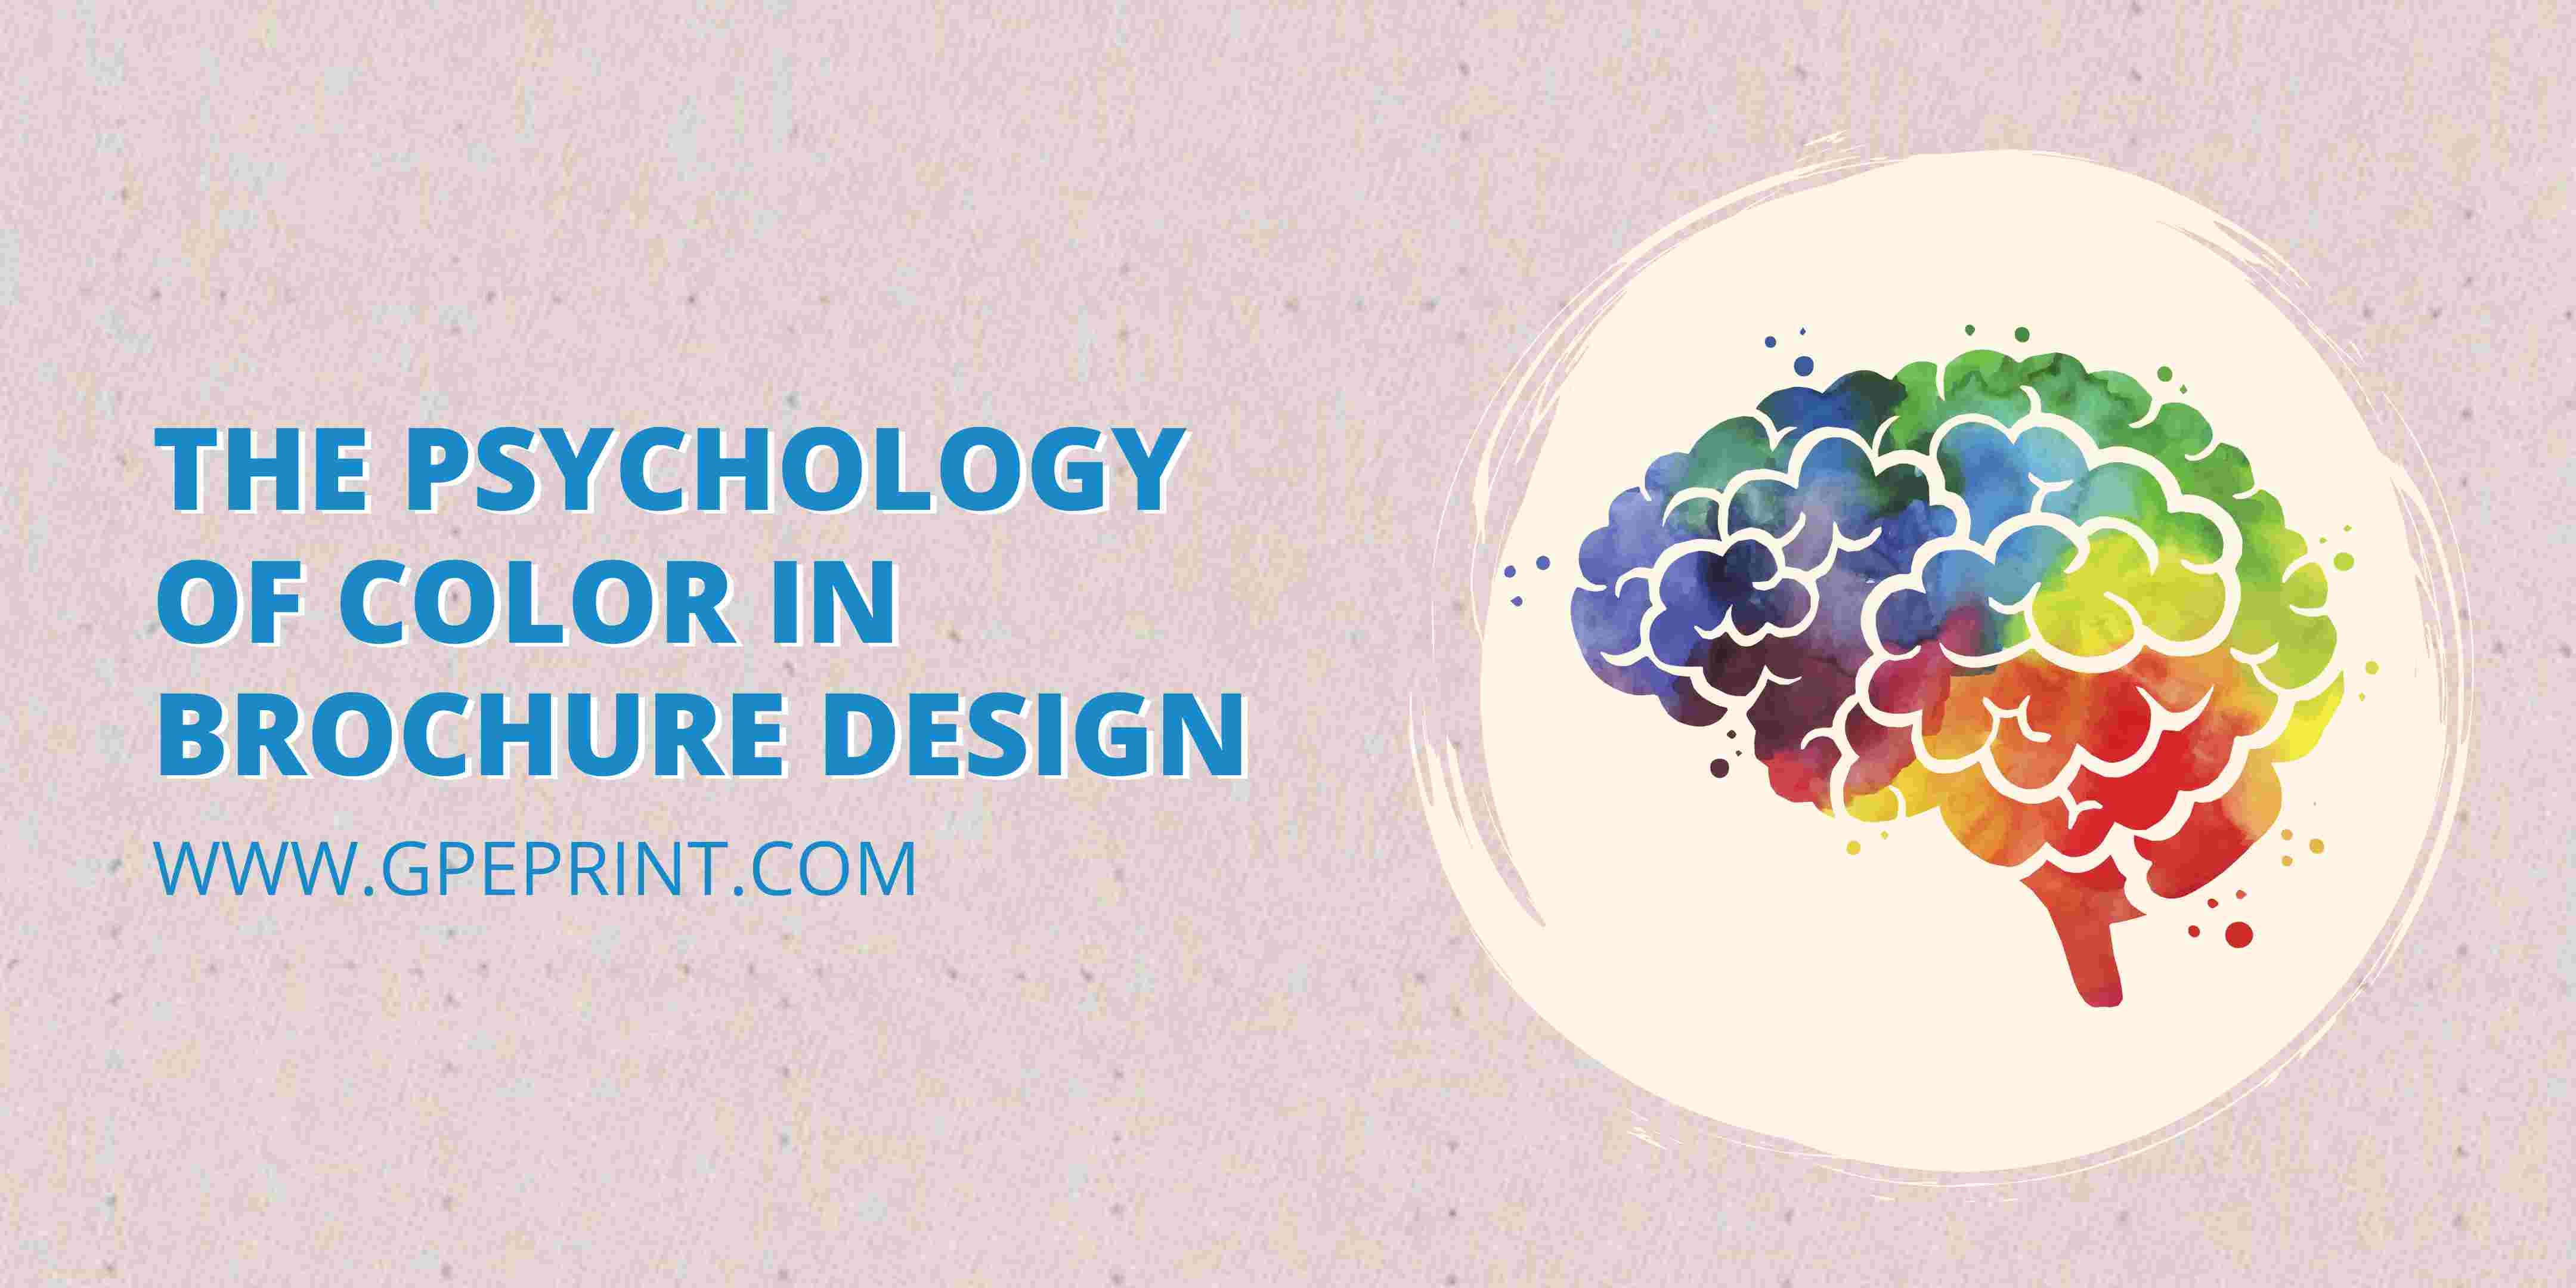 The Psychology of Color in Brochure Design